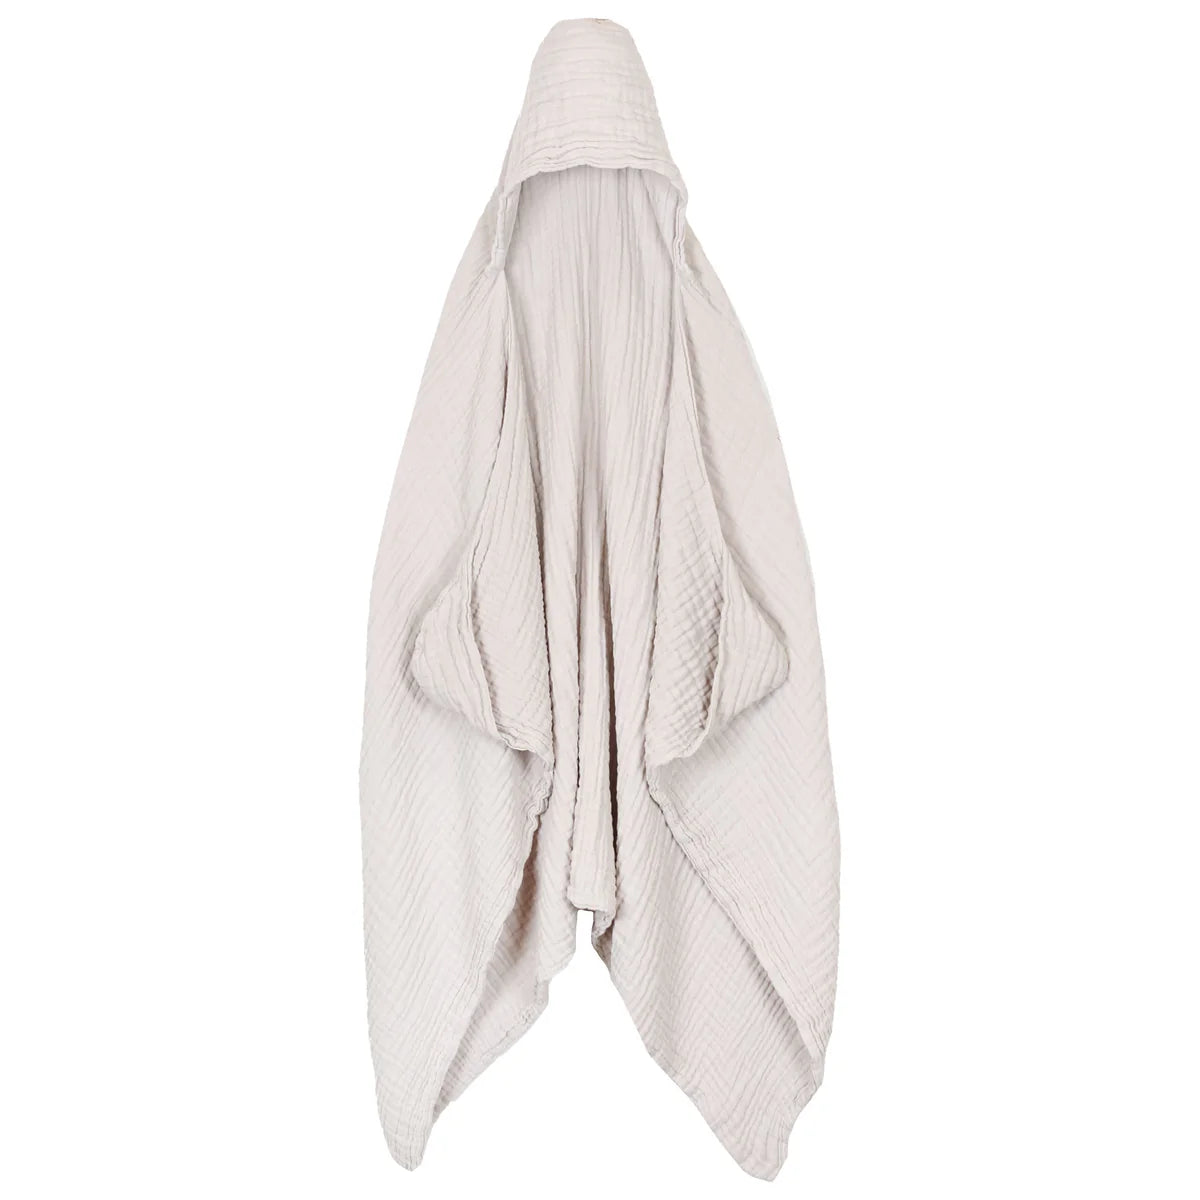 Hooded Bath Towel - Grey